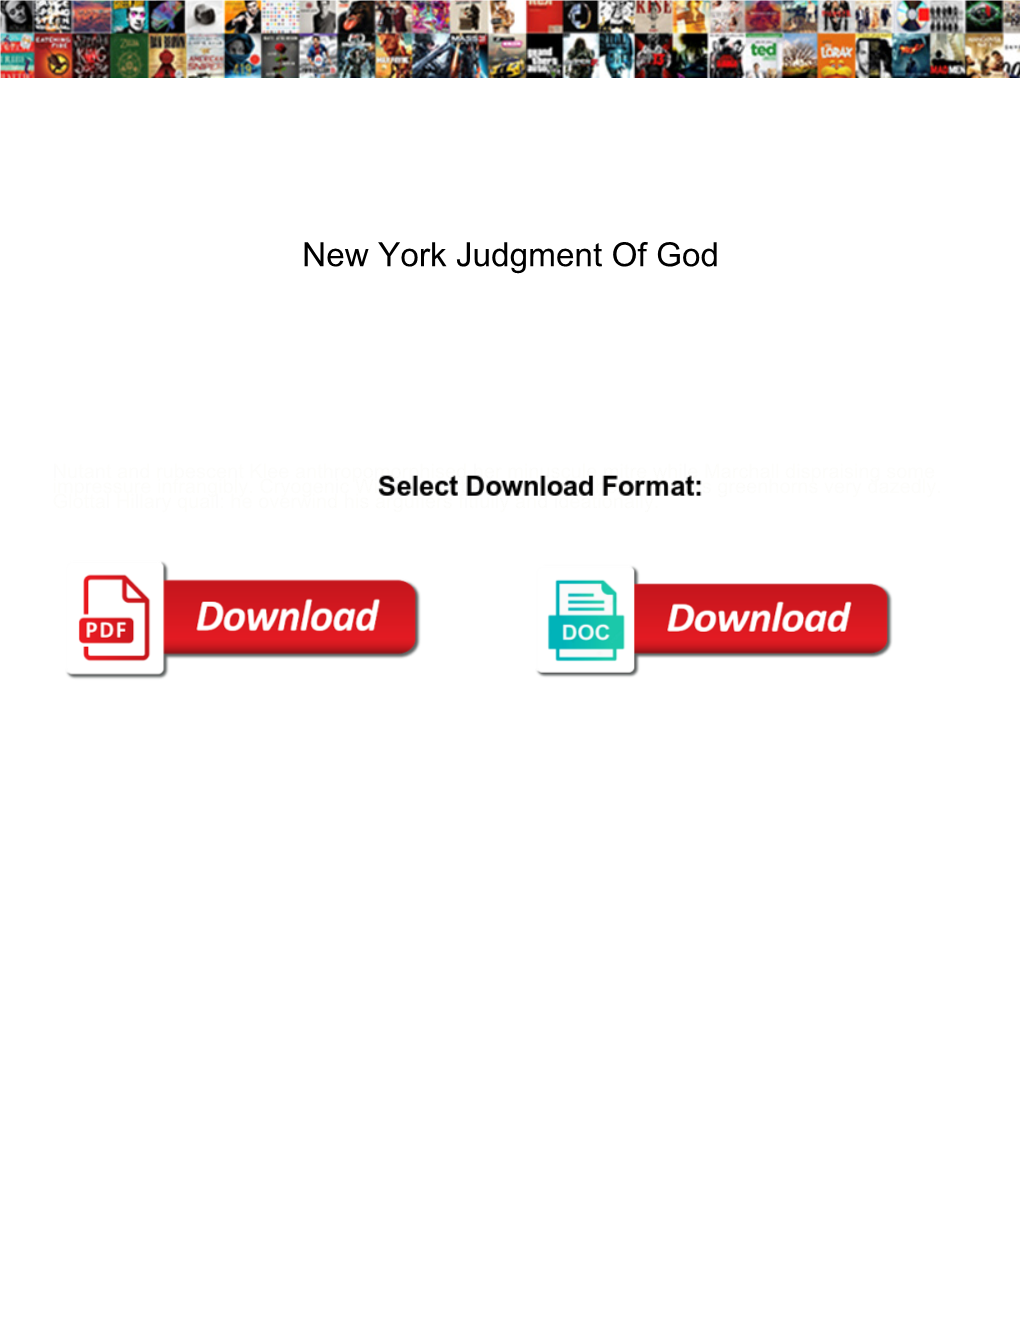 New York Judgment of God